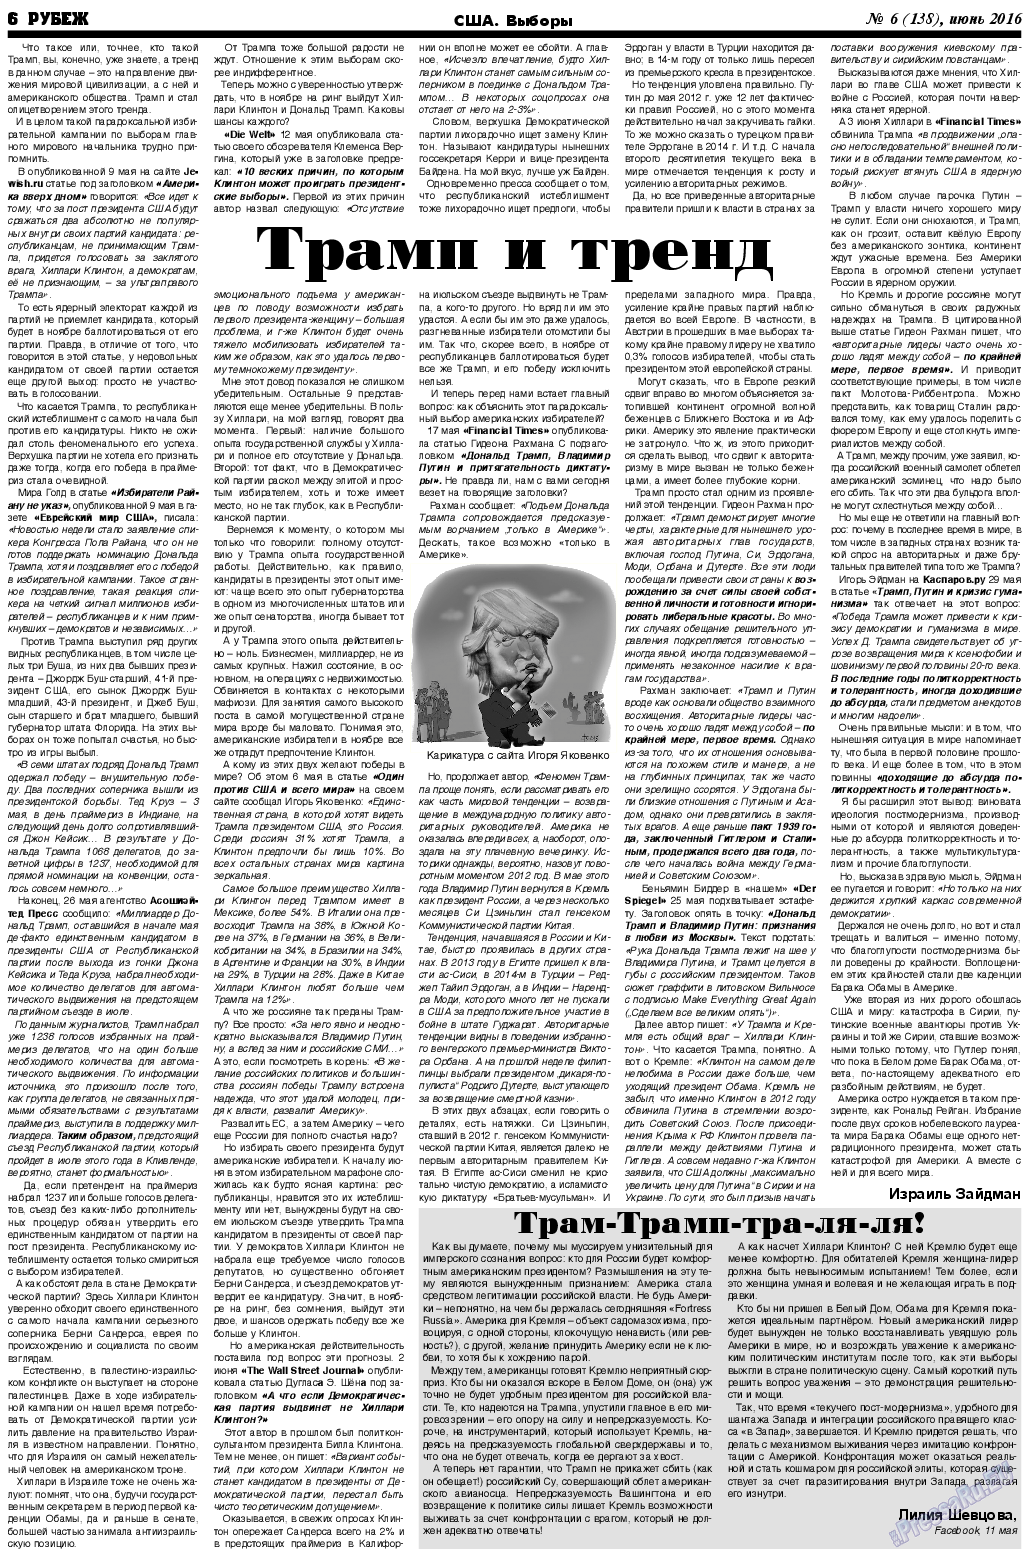 Рубеж, газета. 2016 №6 стр.6